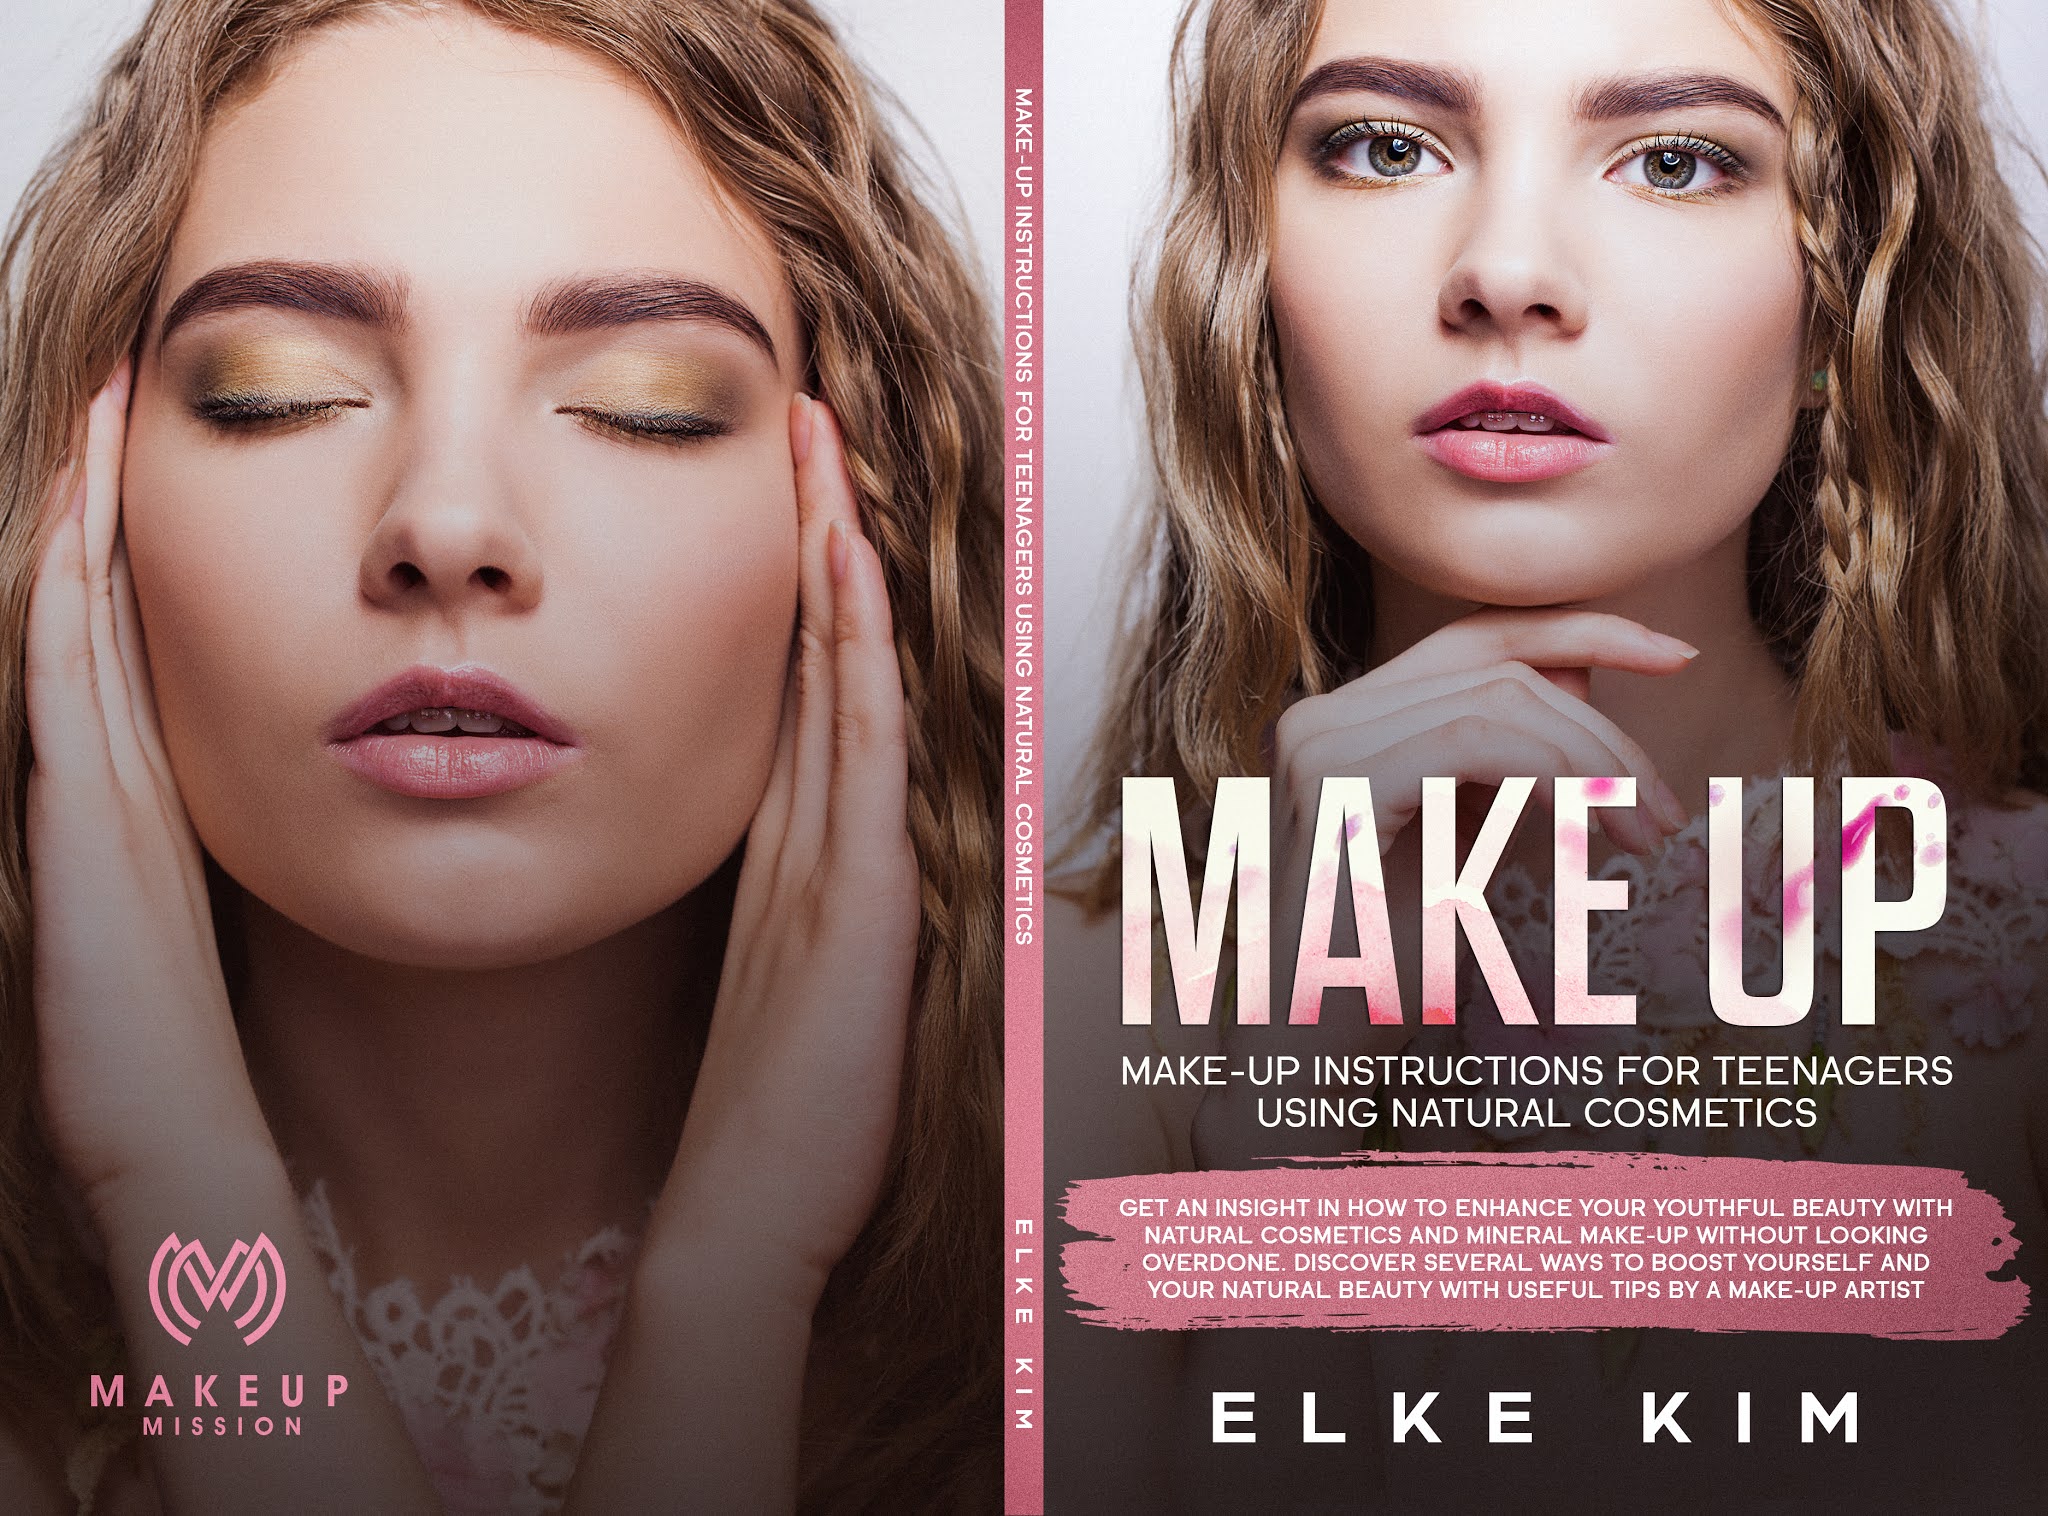 Makeup book - Makeup instructions for teenagers using natural cosmetics